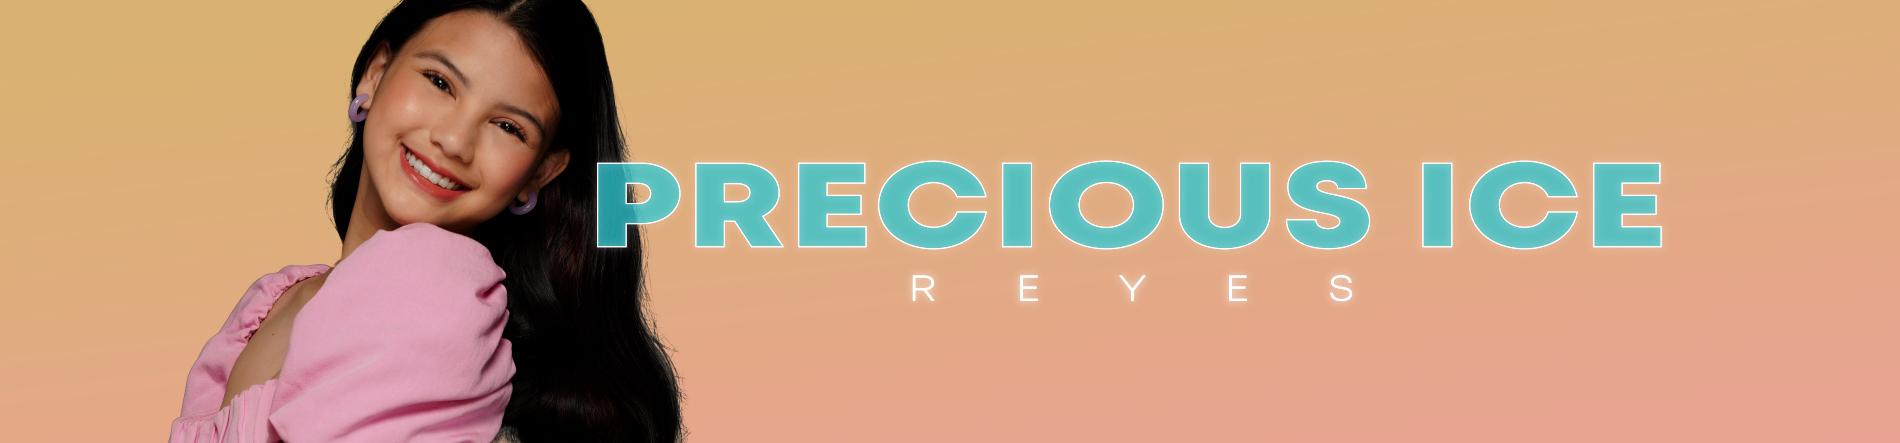 Ice Reyes Desktop Banner